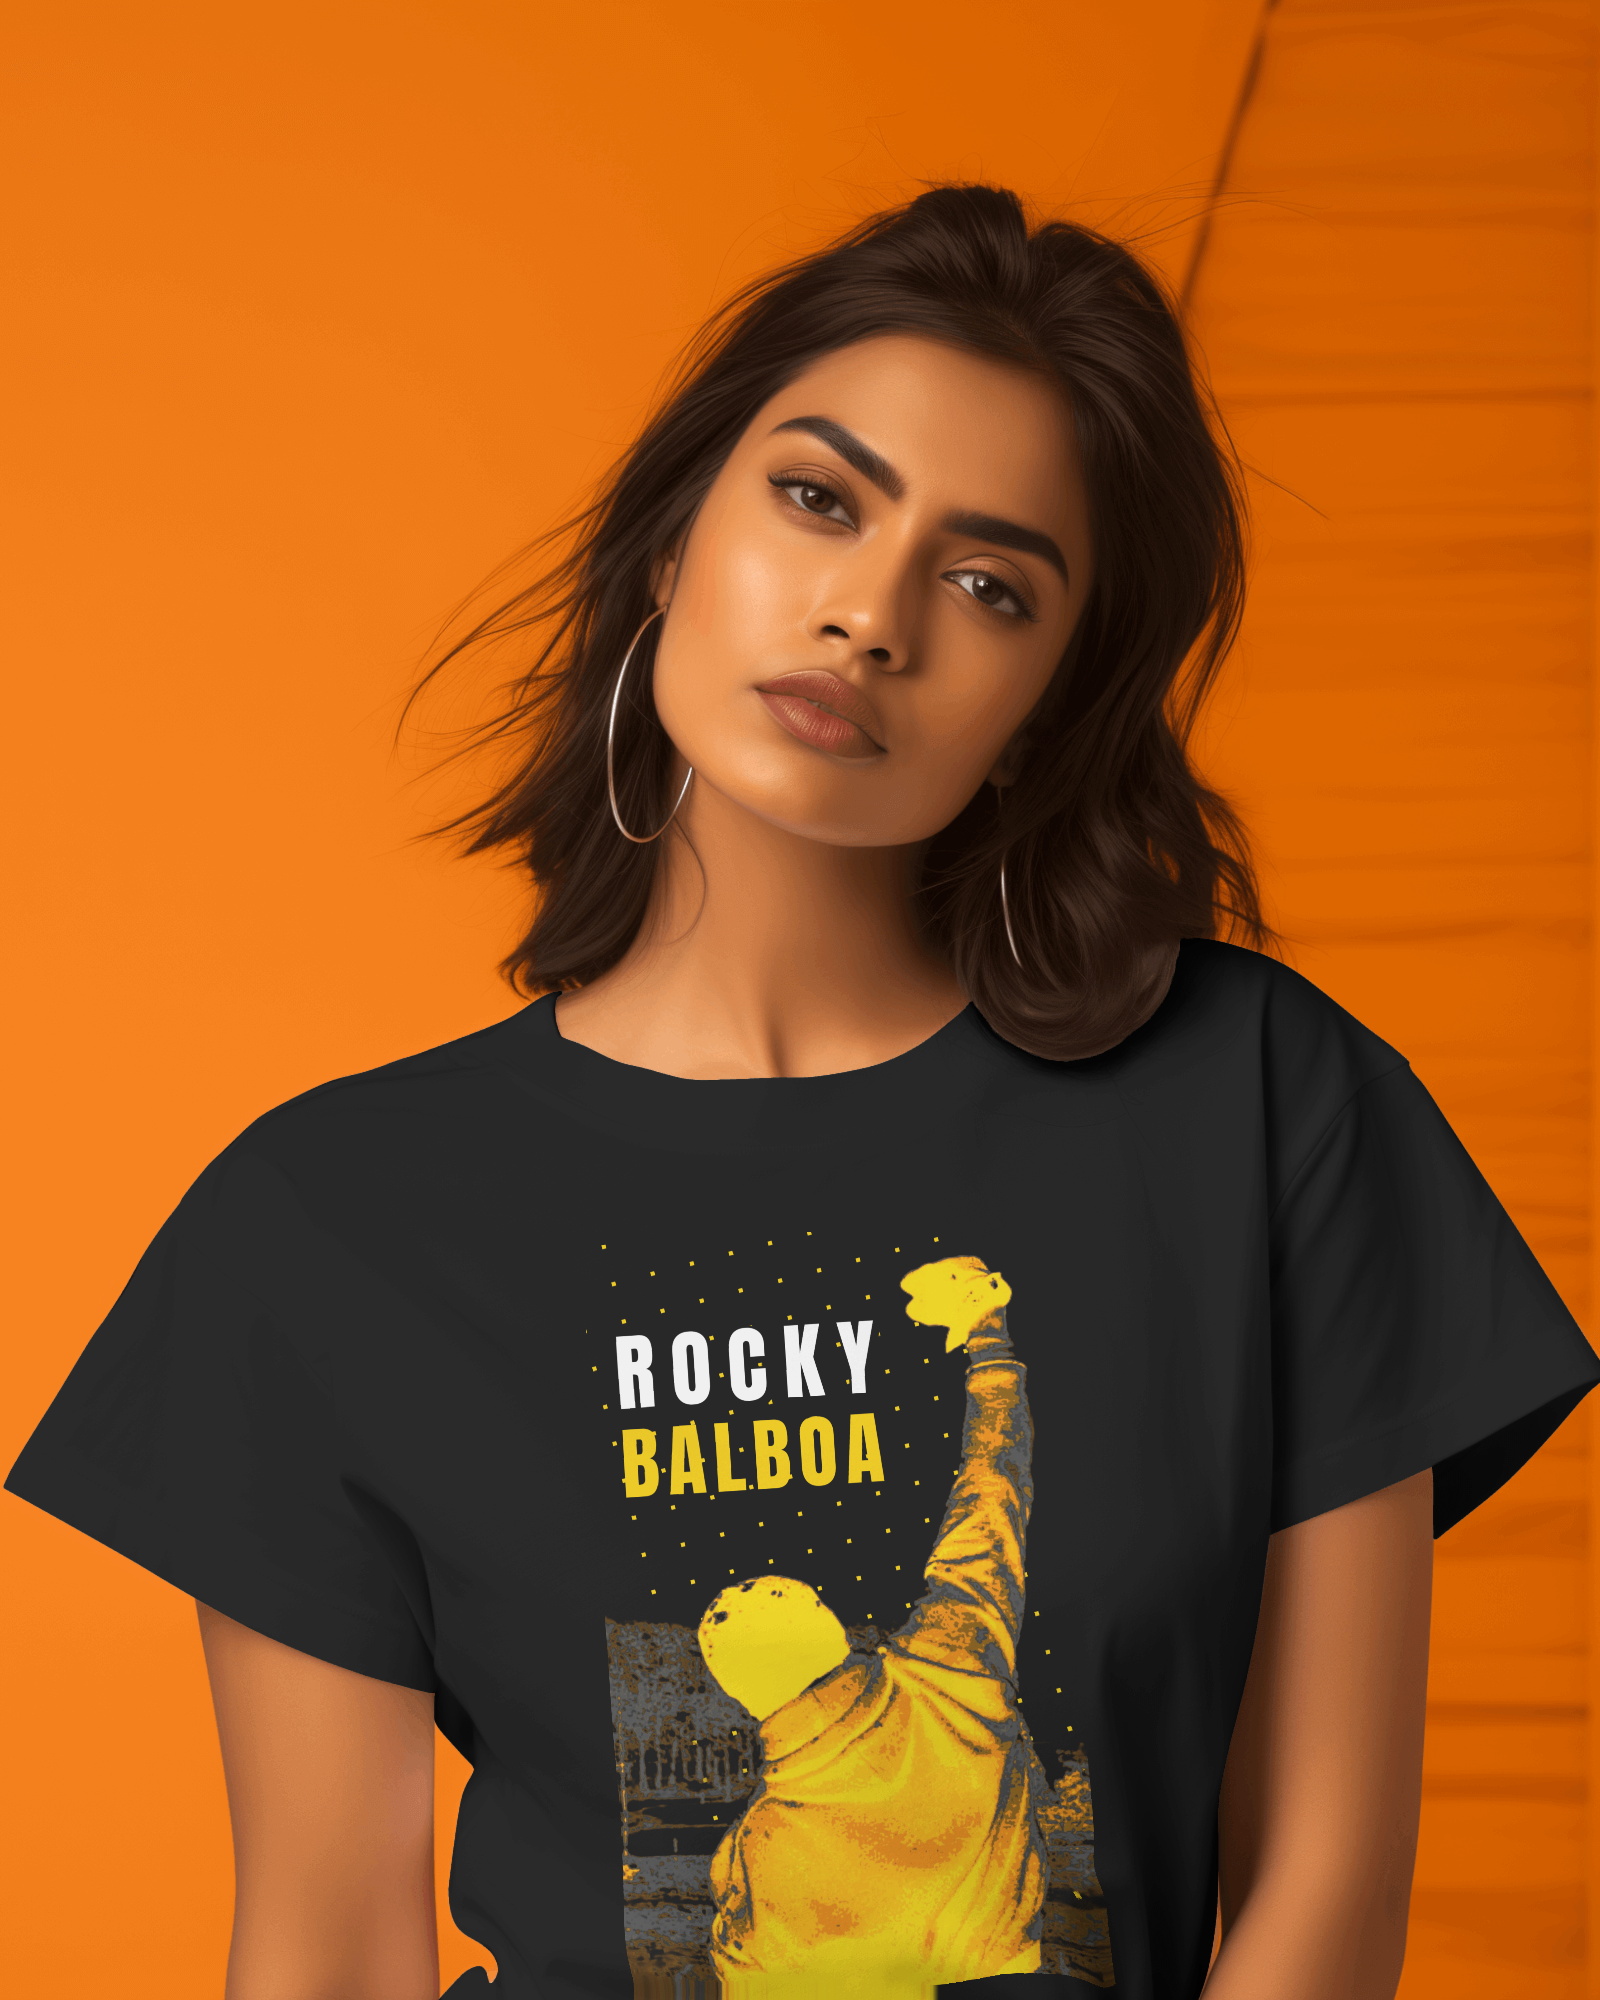 "ROCKY BALBOA" Poster Printed Tshirt | BLACK COLOR